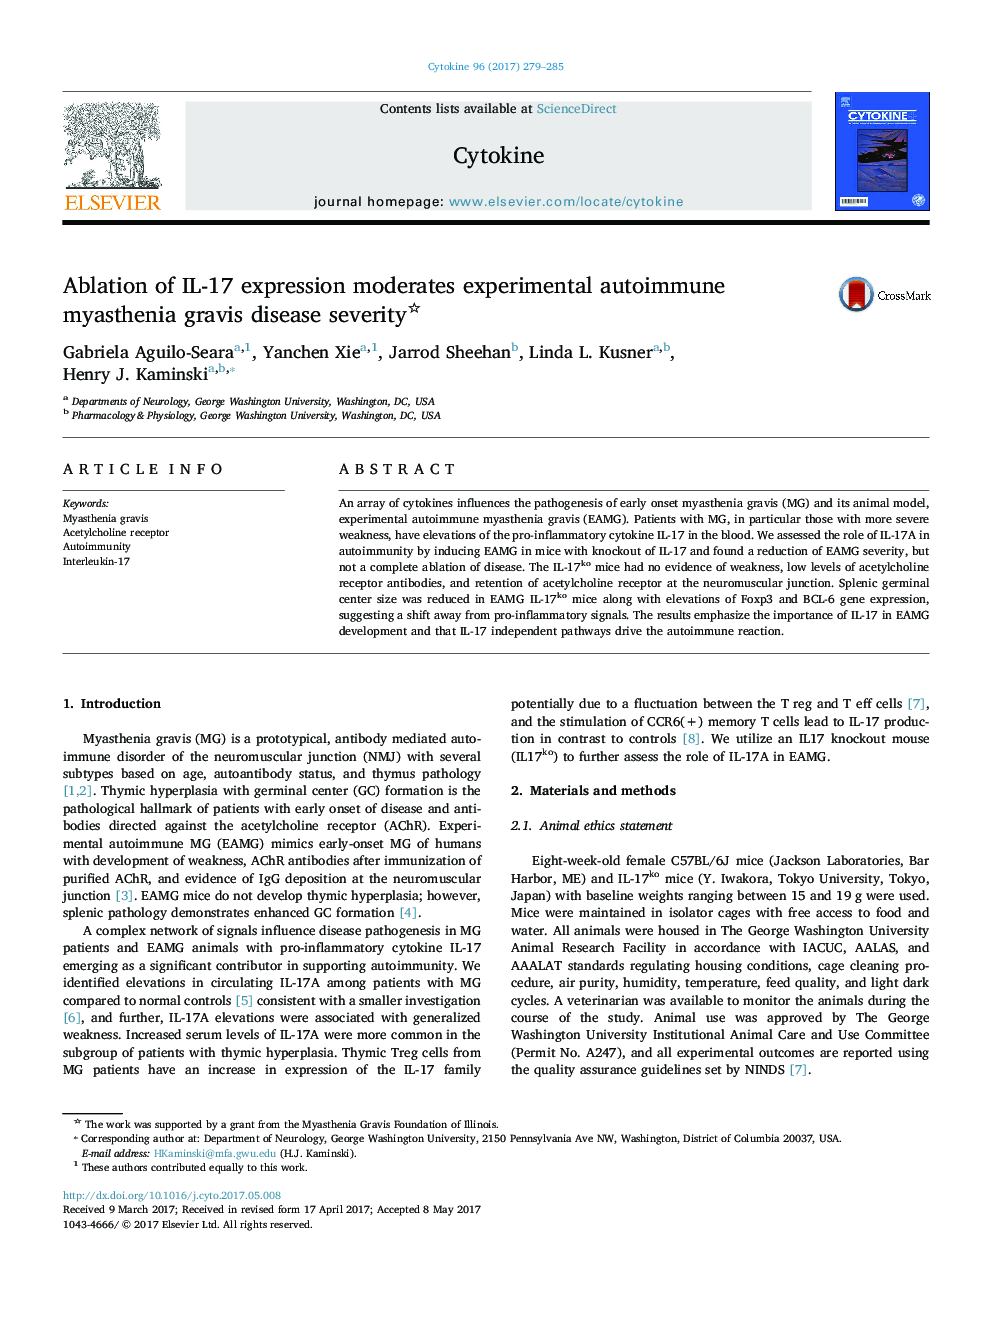 Ablation of IL-17 expression moderates experimental autoimmune myasthenia gravis disease severity